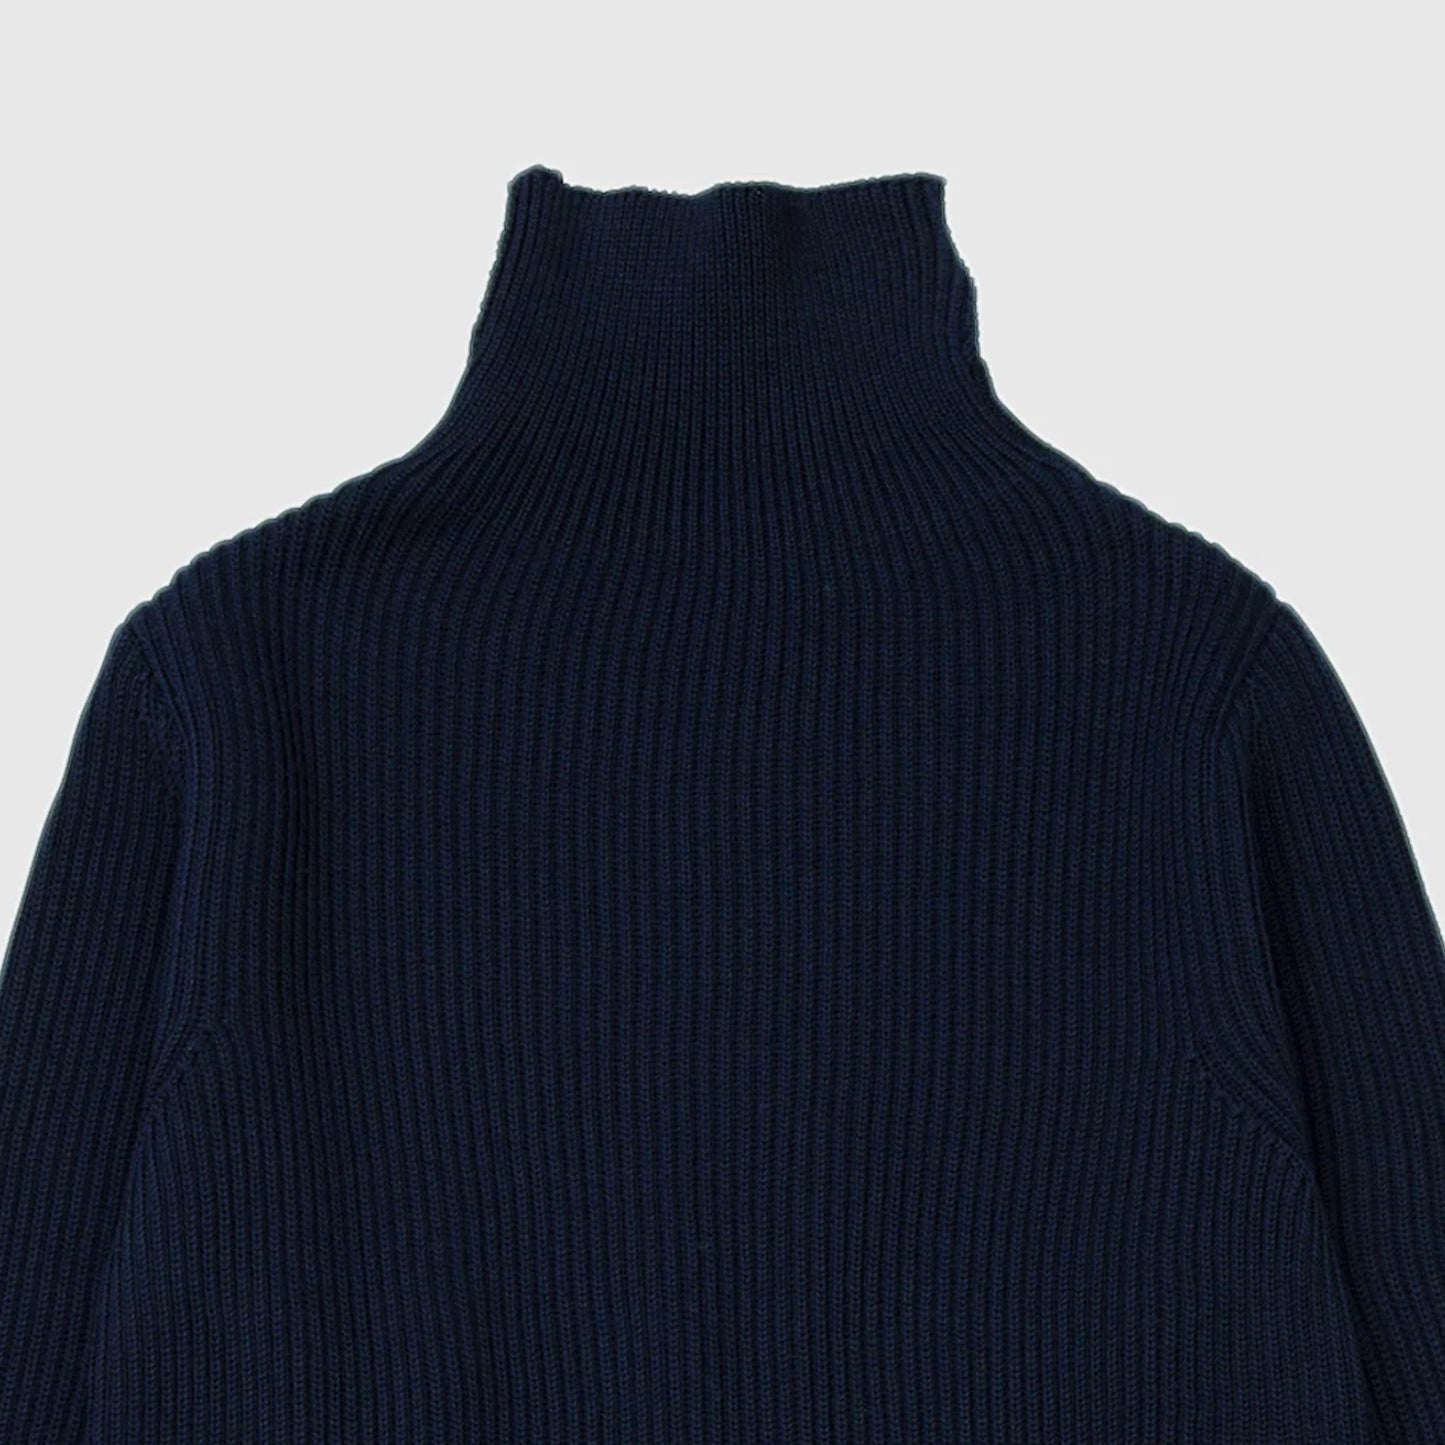 Navy Turtleneck Sweater